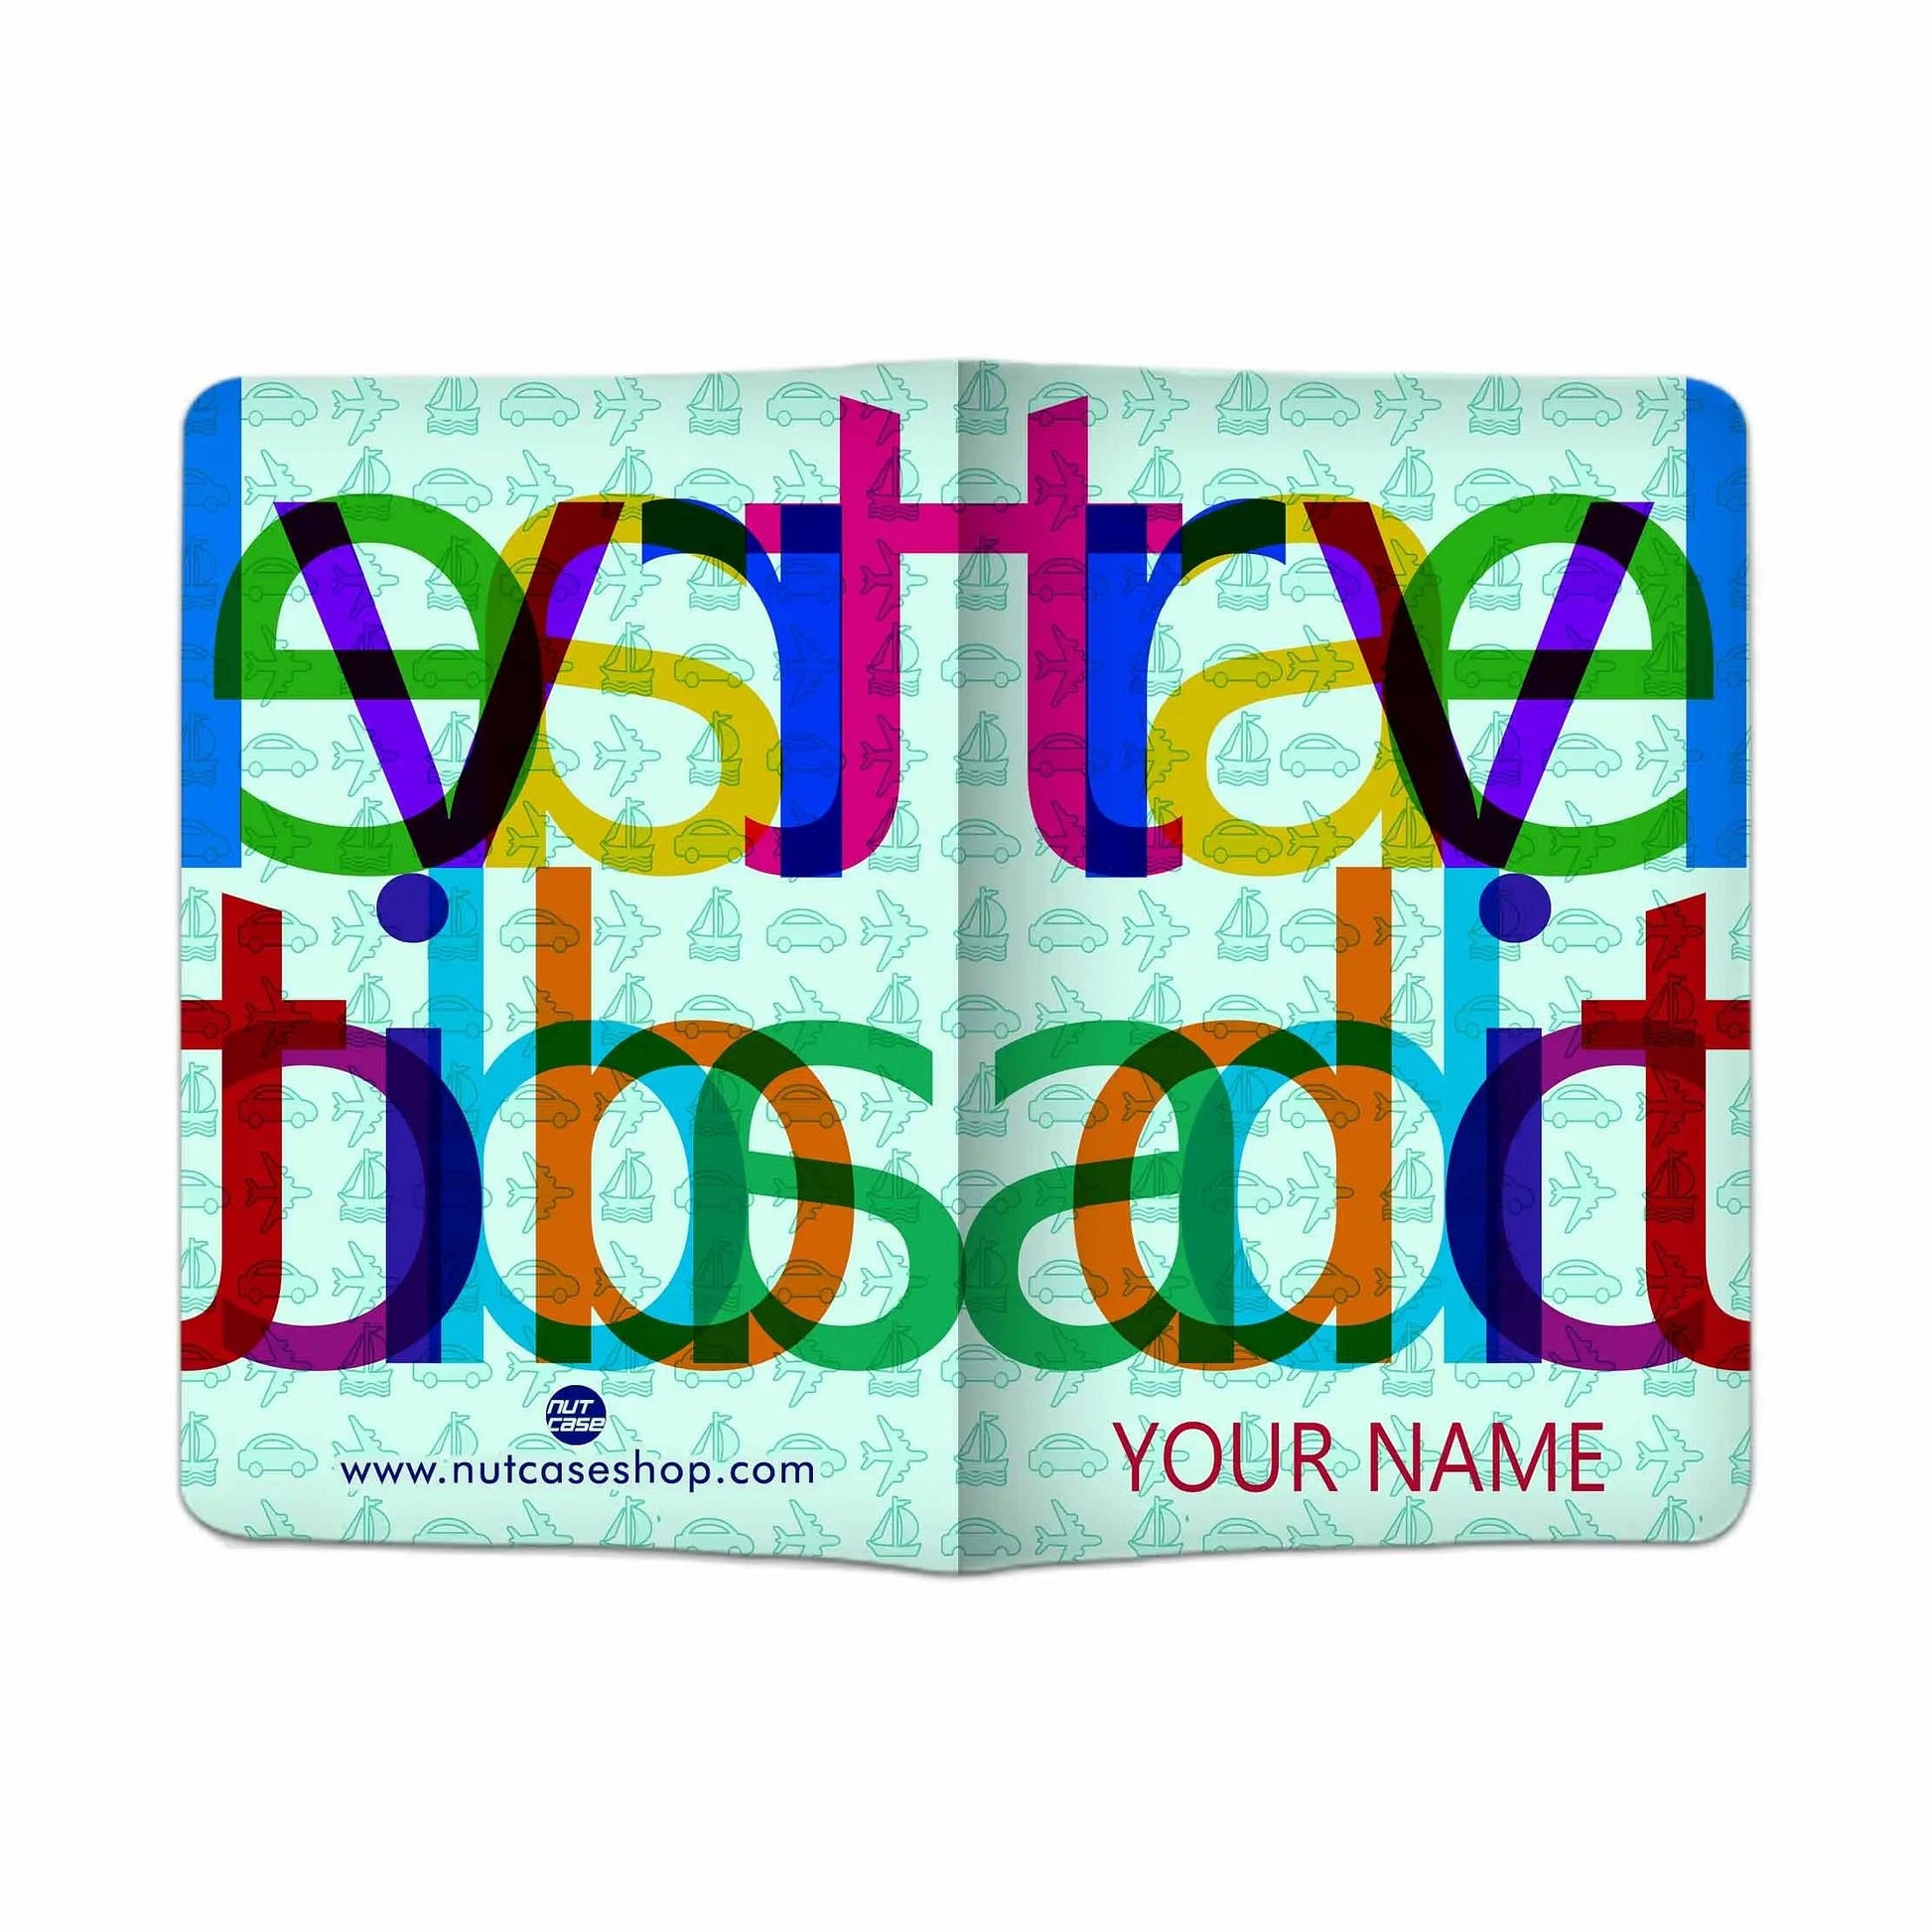 Beautiful Personalized Passport Cover -  TRAVEL ADDICT BLUE - Nutcase